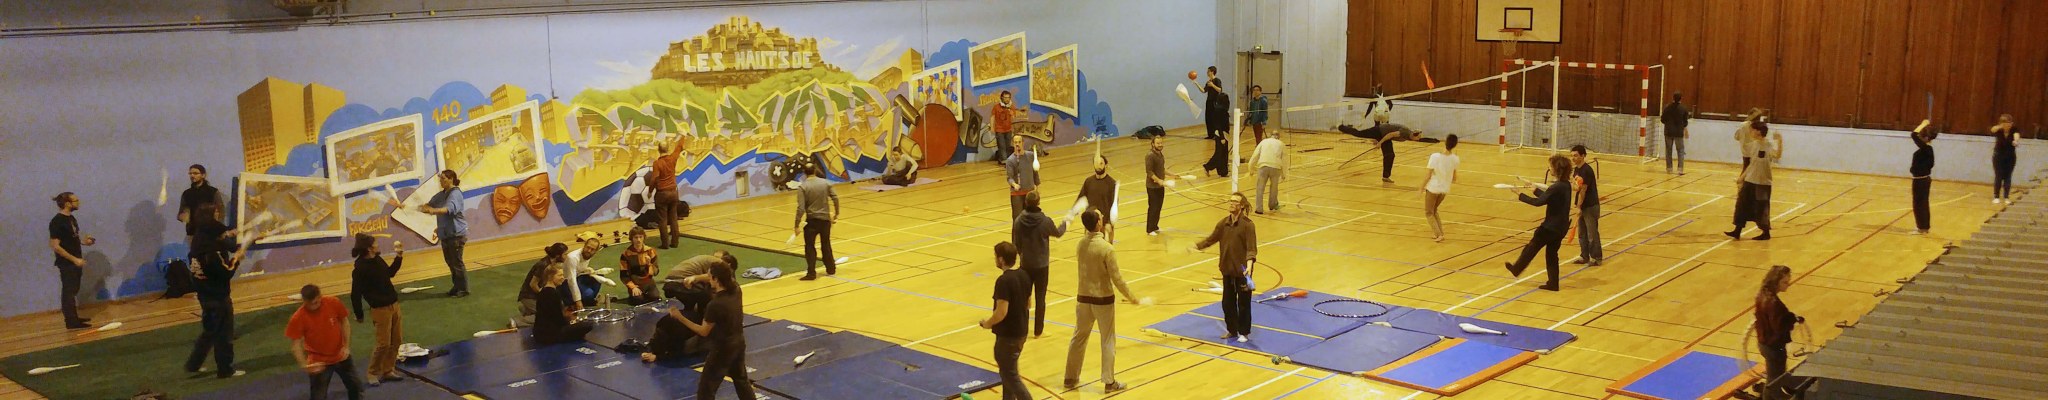 Gymnase de l'APJ, atelier jonglage